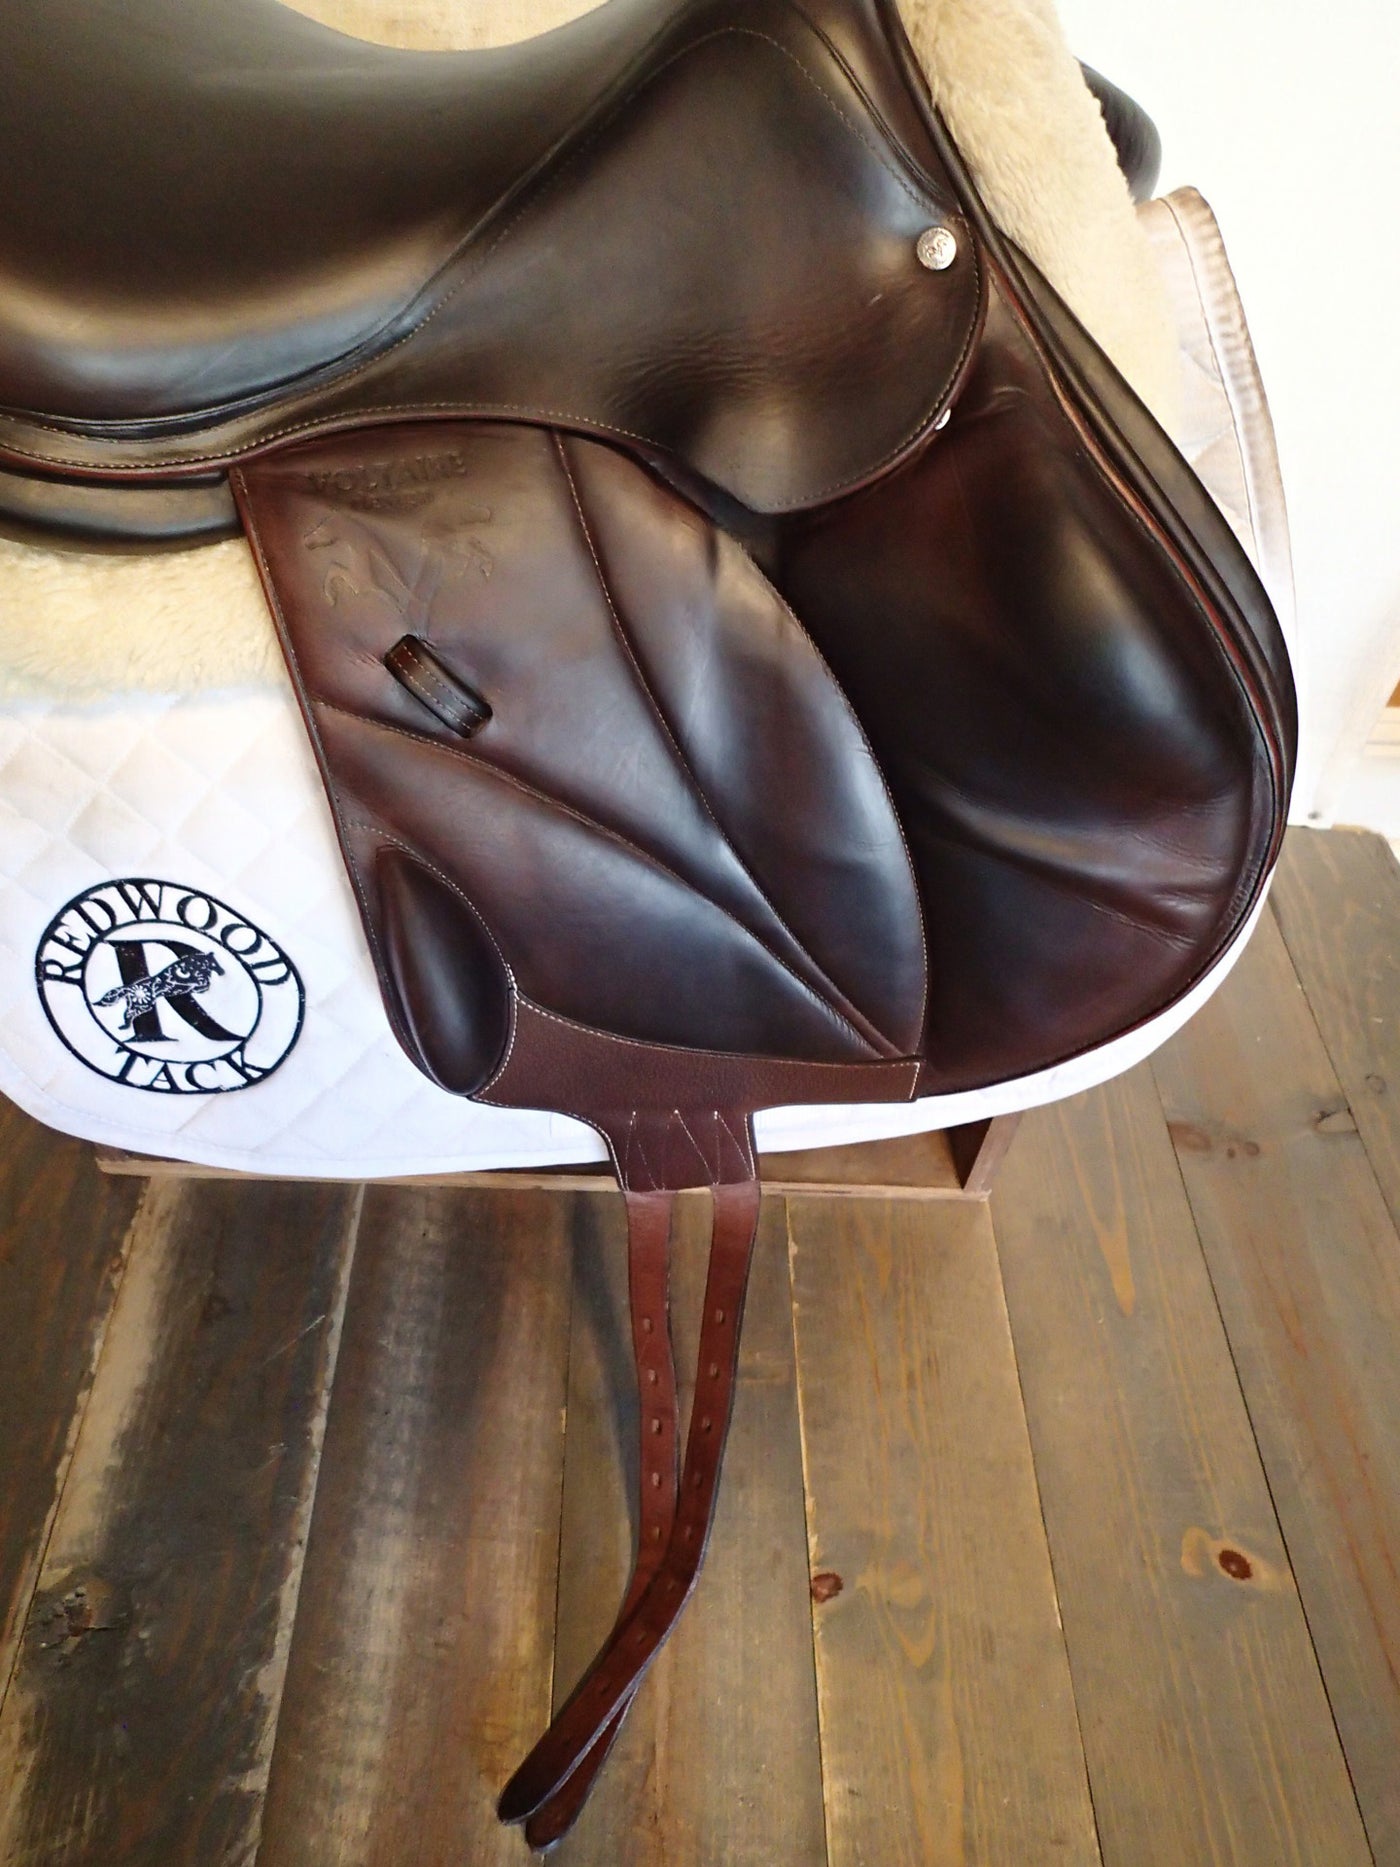 17.5" Voltaire Lexington Monoflap Saddle - Full Buffalo - 2013 - 2AA Flaps - 4.75" dot to dot - Pro Panels